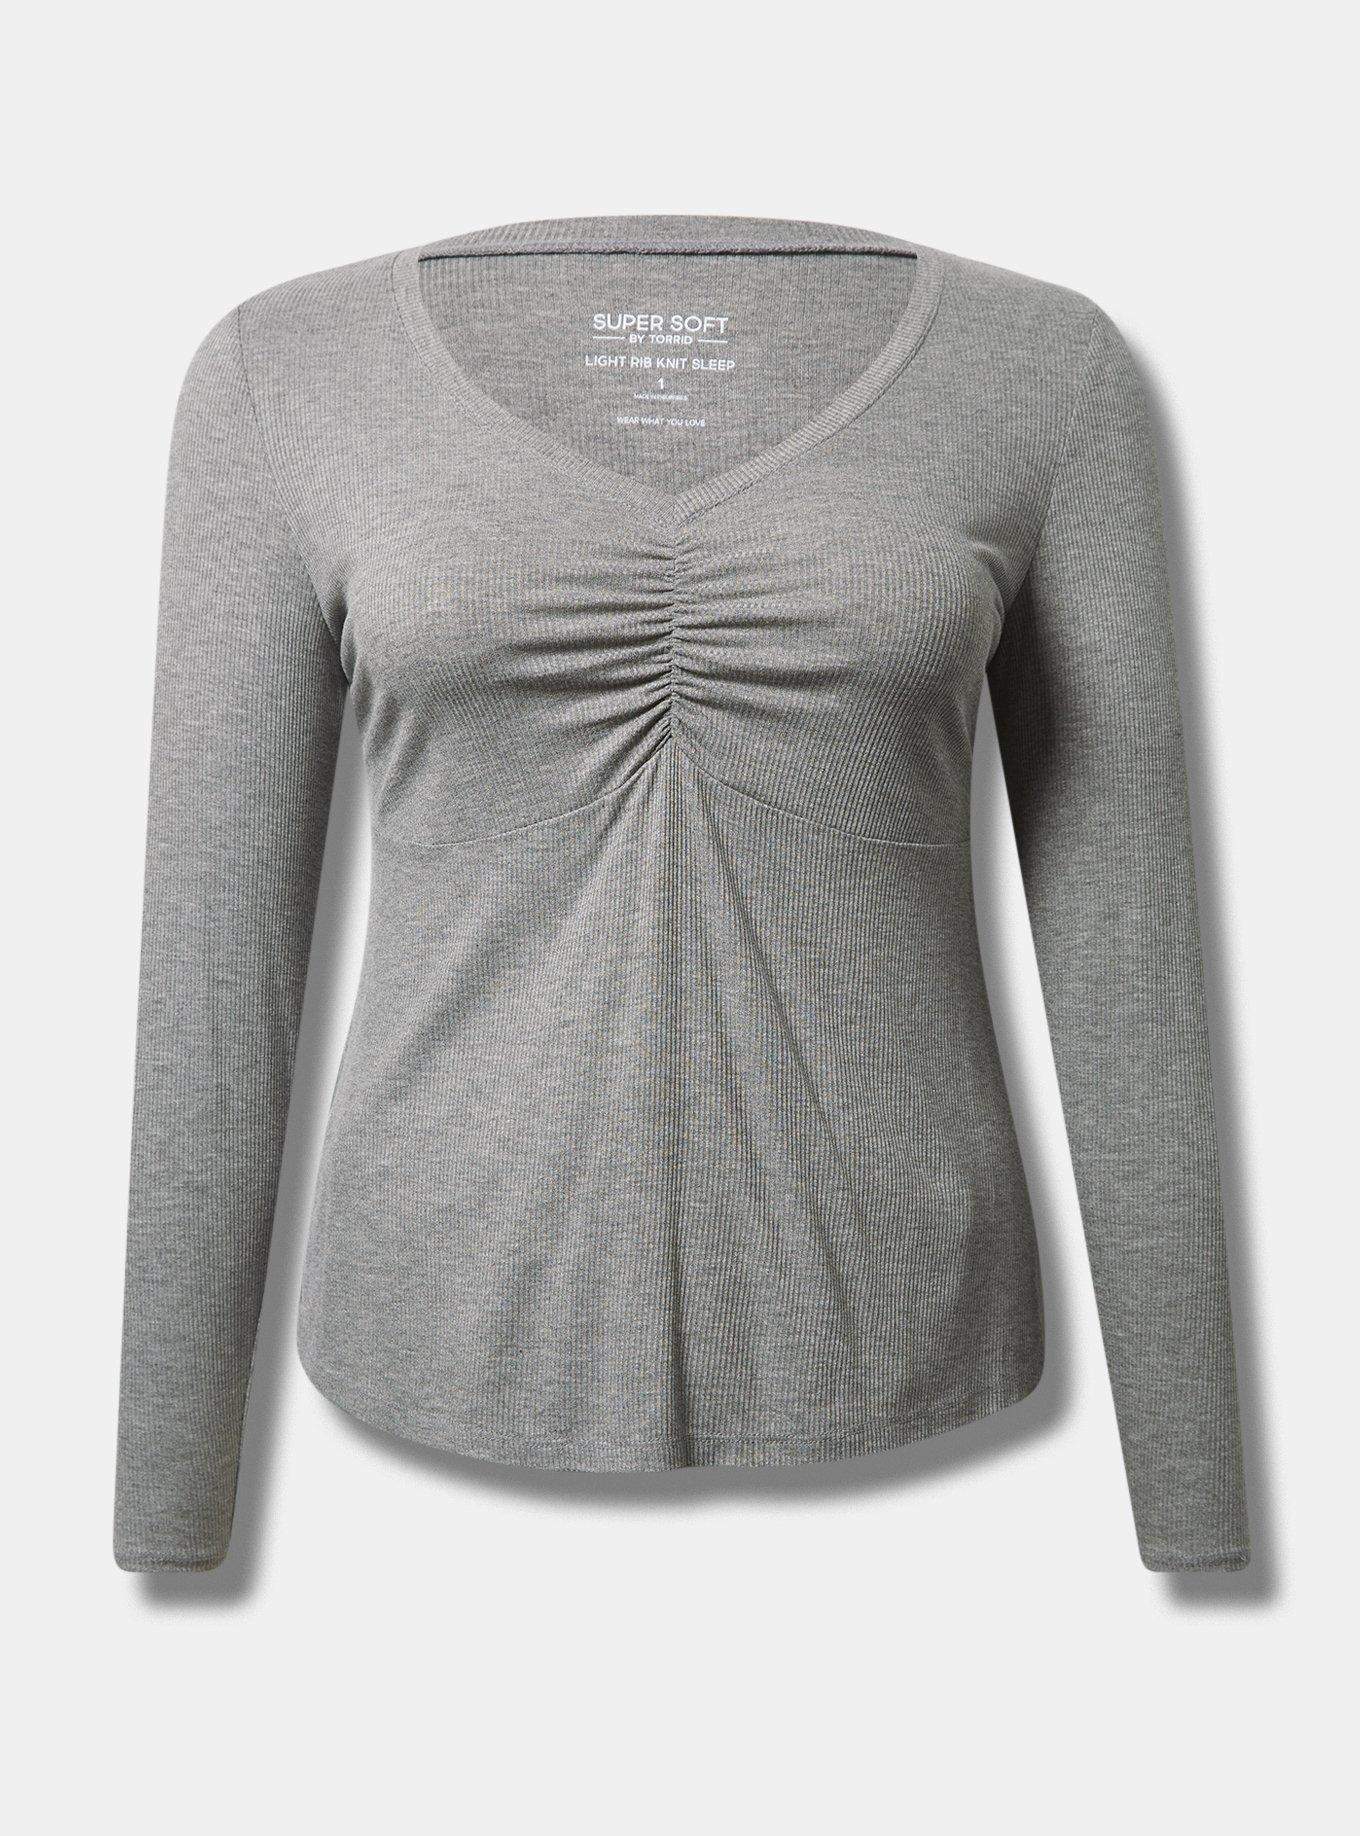 Torrid Cute Grey Off-Shoulder Twist Tee Shirt Plus Size 3X, 22/24